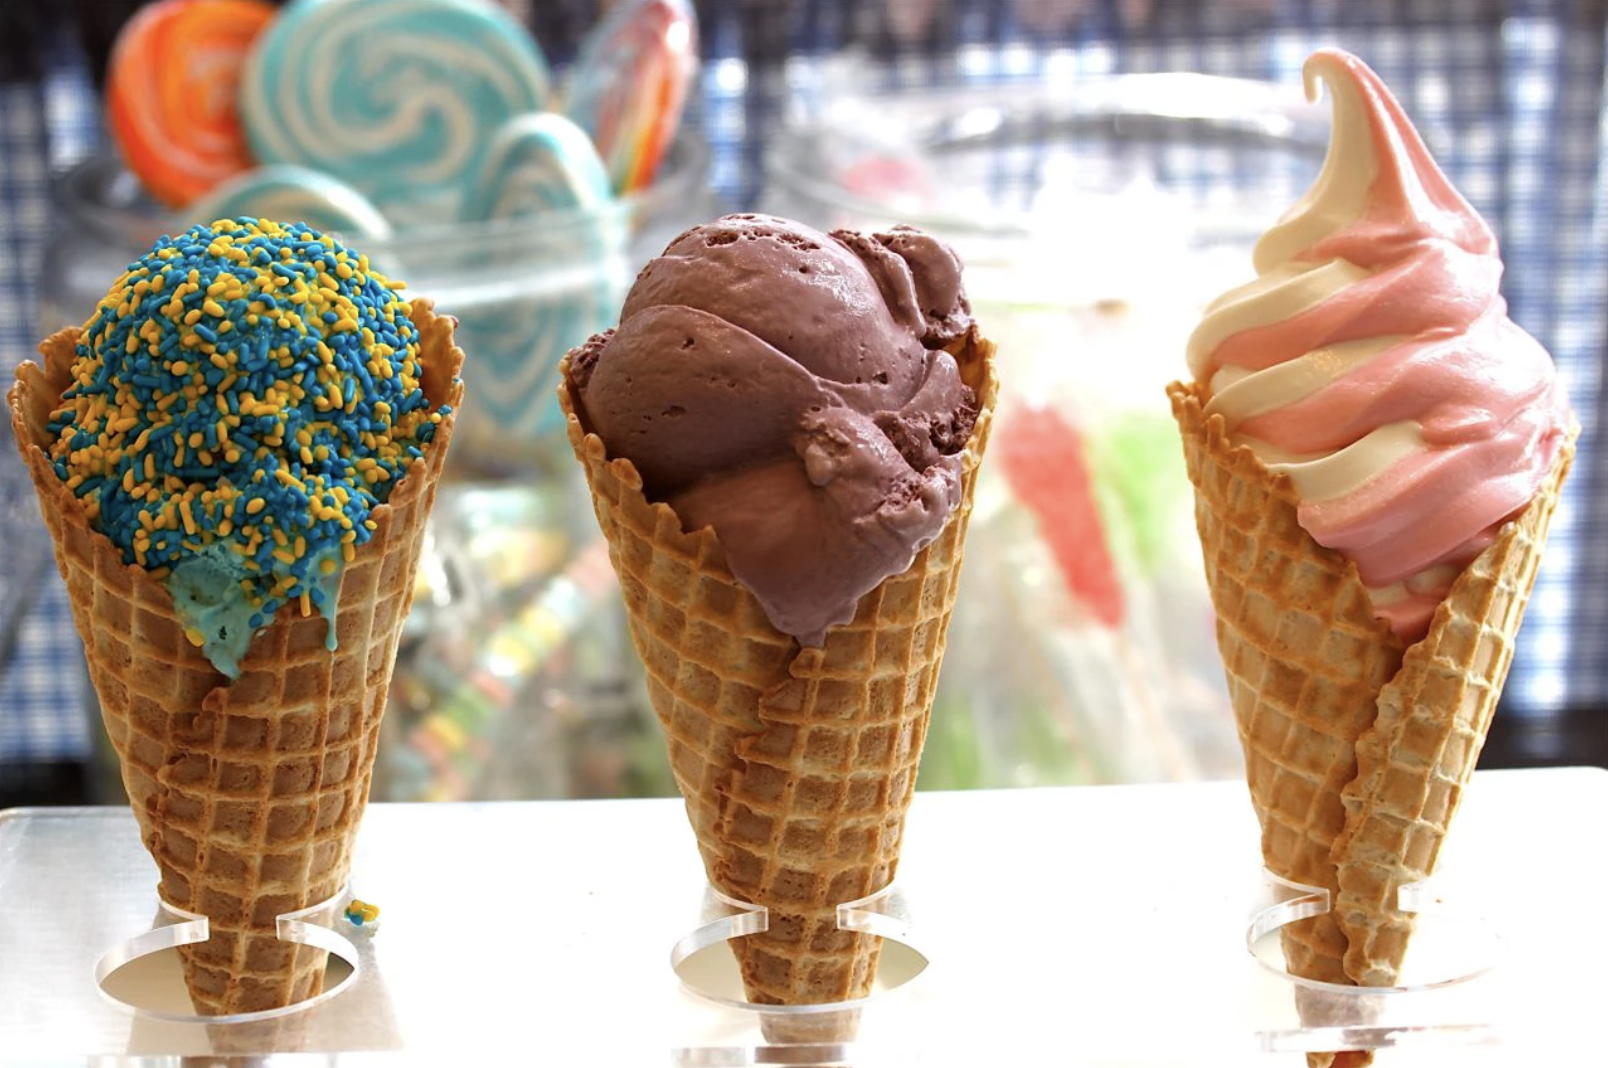 Ice cream new. Мороженое. Красивое мороженое. Мороженое разные. Необычное мороженое в рожке.